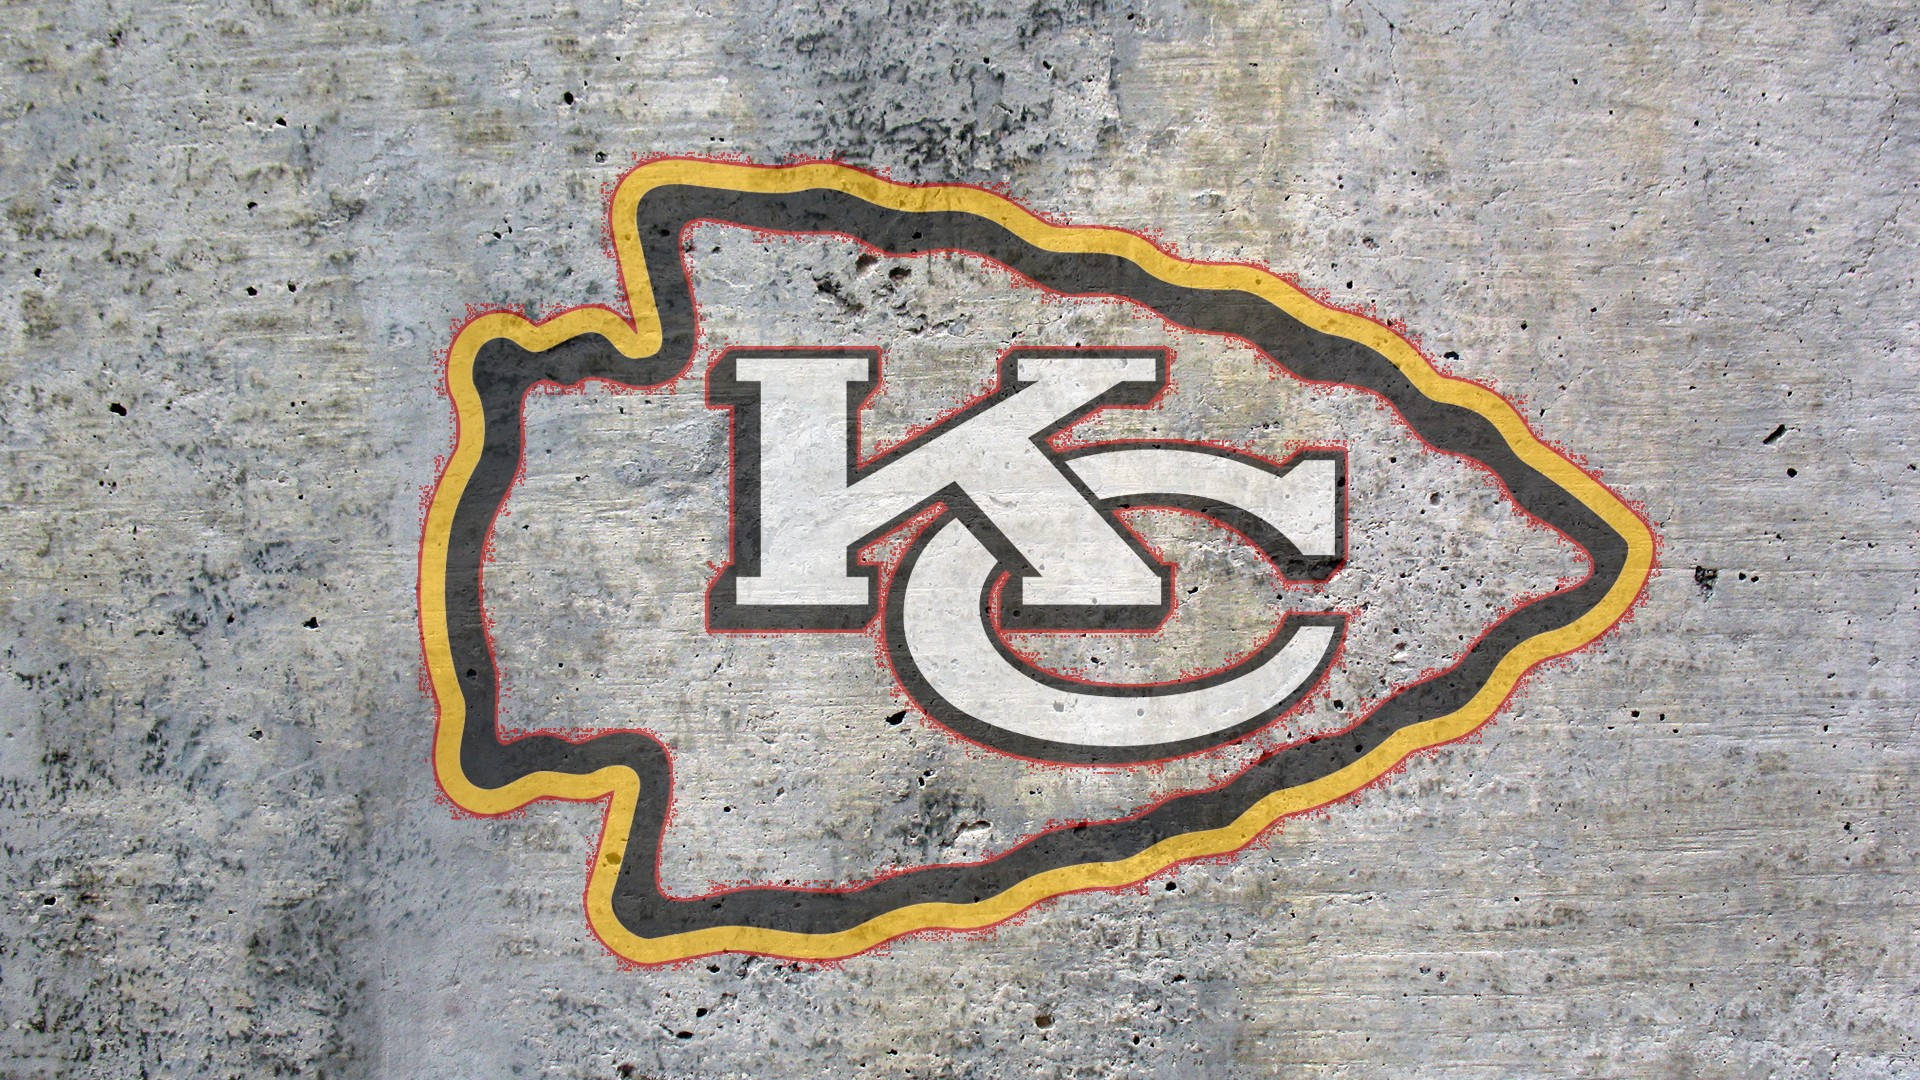 Kansascity Chiefs Logo Auf Beton. Wallpaper